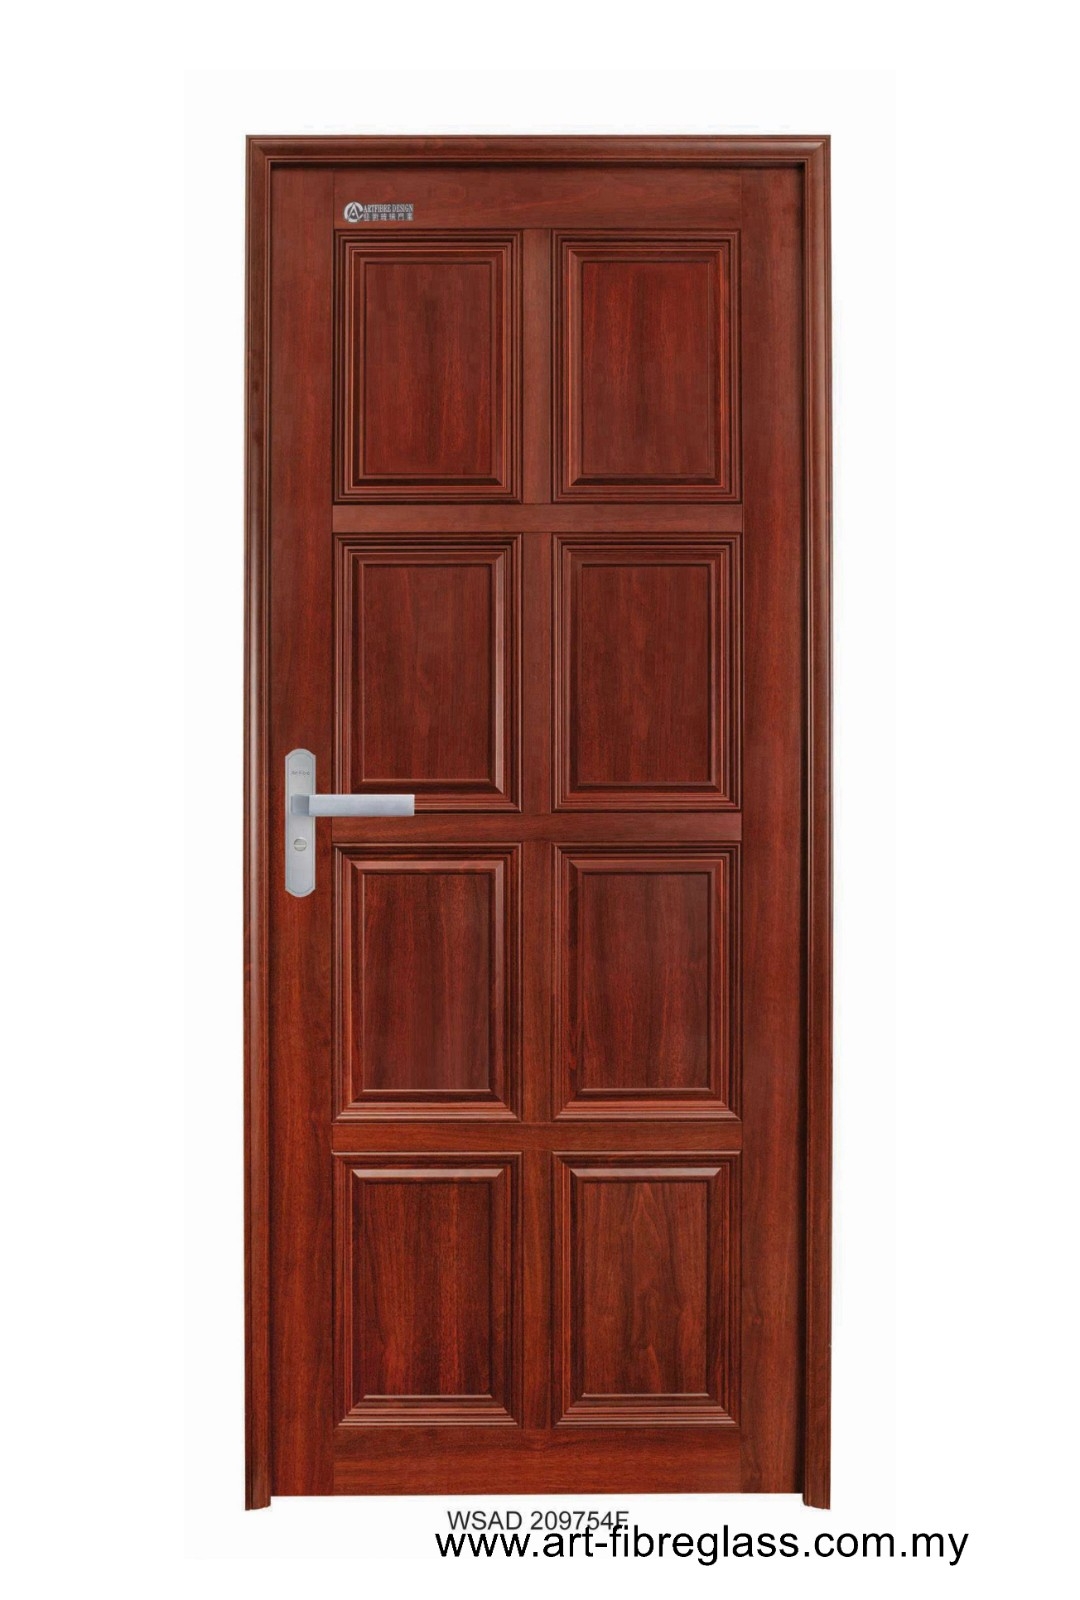 Wood Solid Aluminium Door - WSAD 209754F Wood Grain Solid Aluminium Door Door & Door Design Choose Sample / Pattern Chart